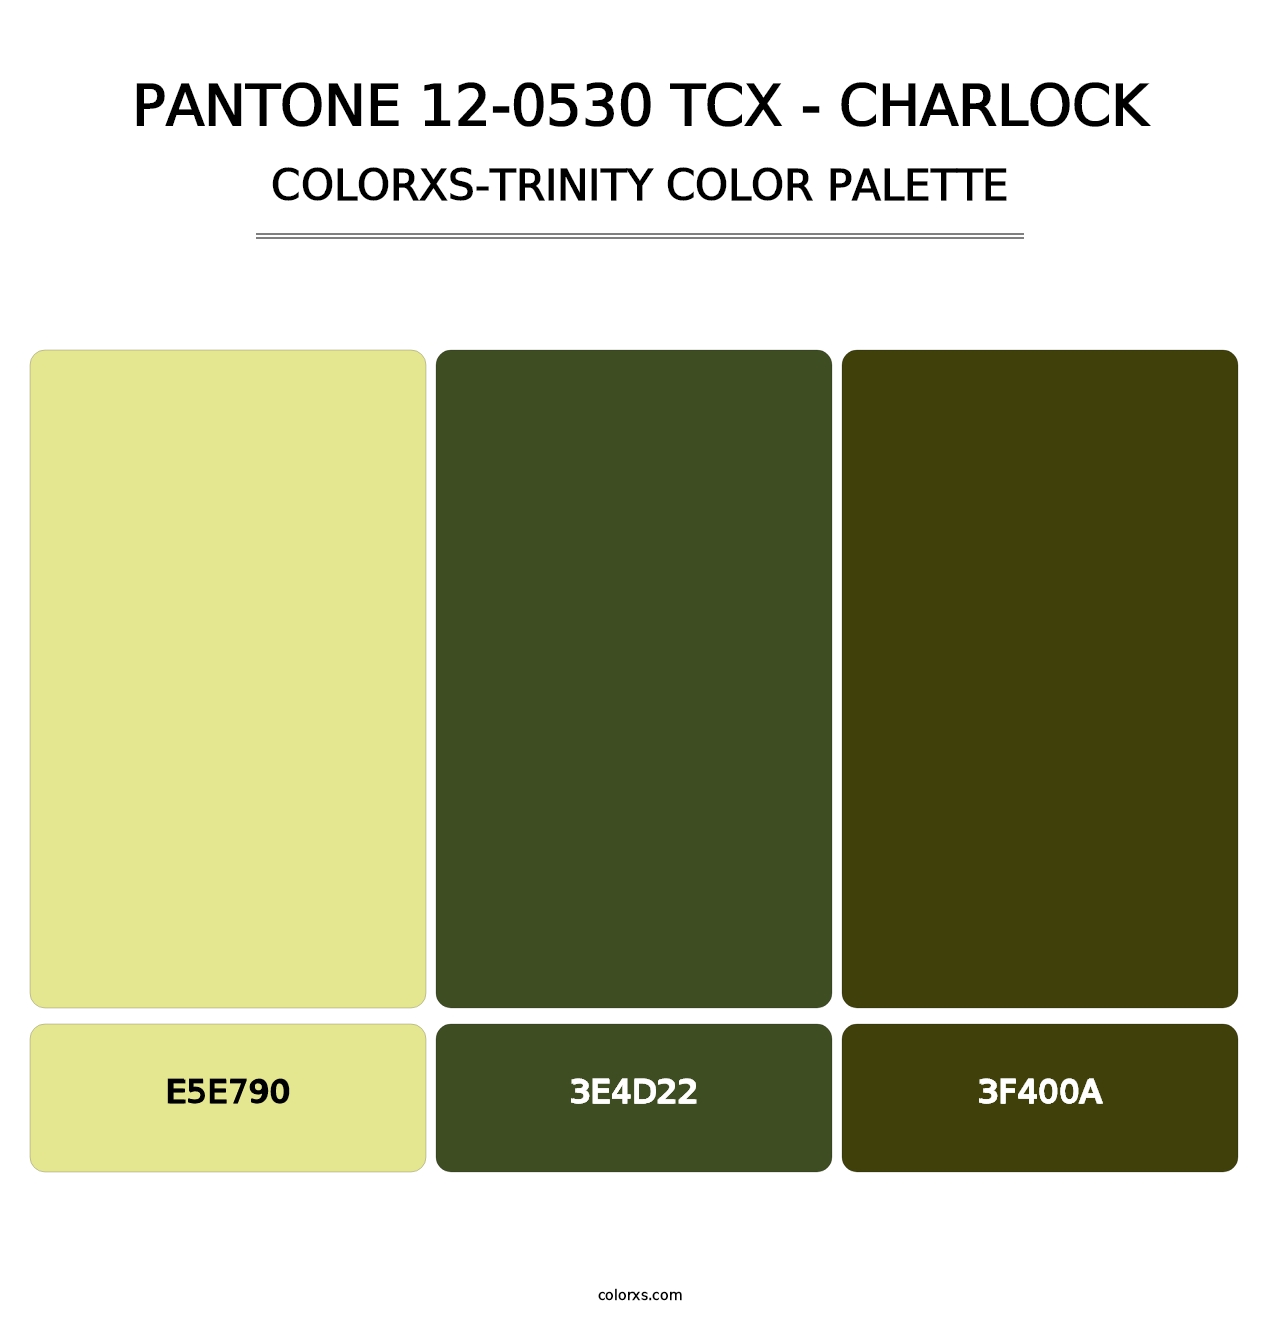 PANTONE 12-0530 TCX - Charlock - Colorxs Trinity Palette